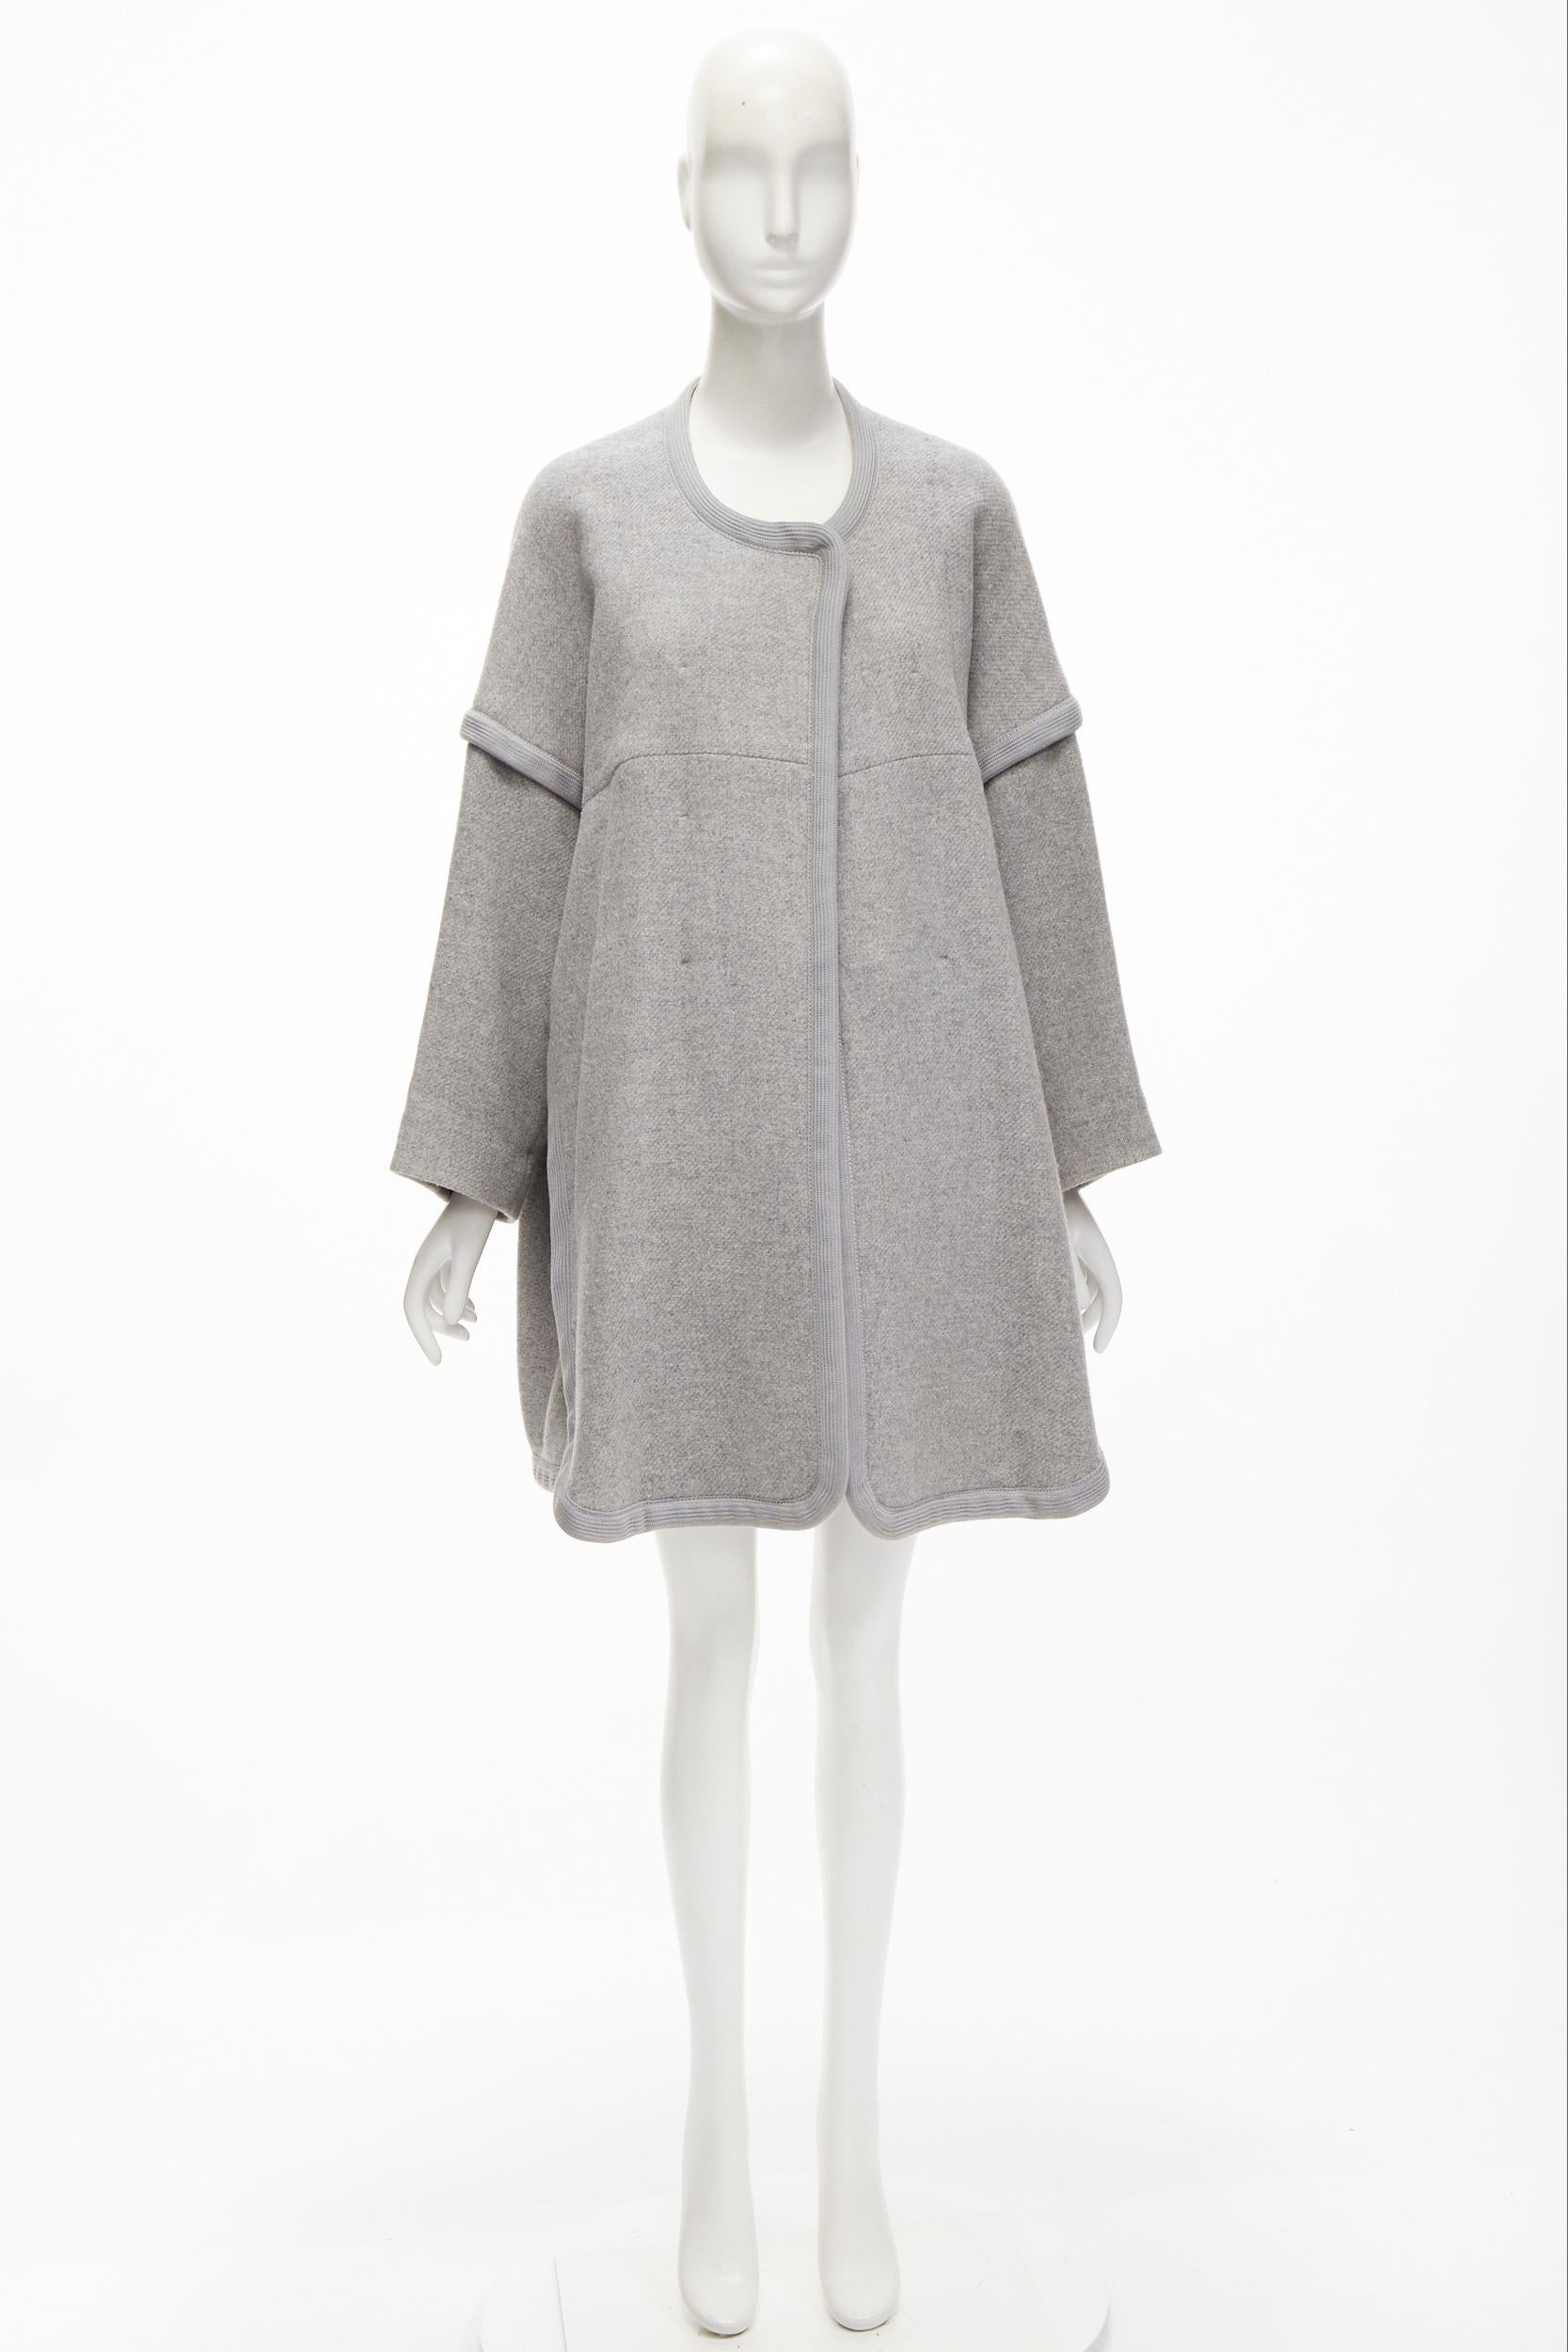 CHLOE virgin wool blend grey cotton trim wide sleeve boxy coat FR38 M 7